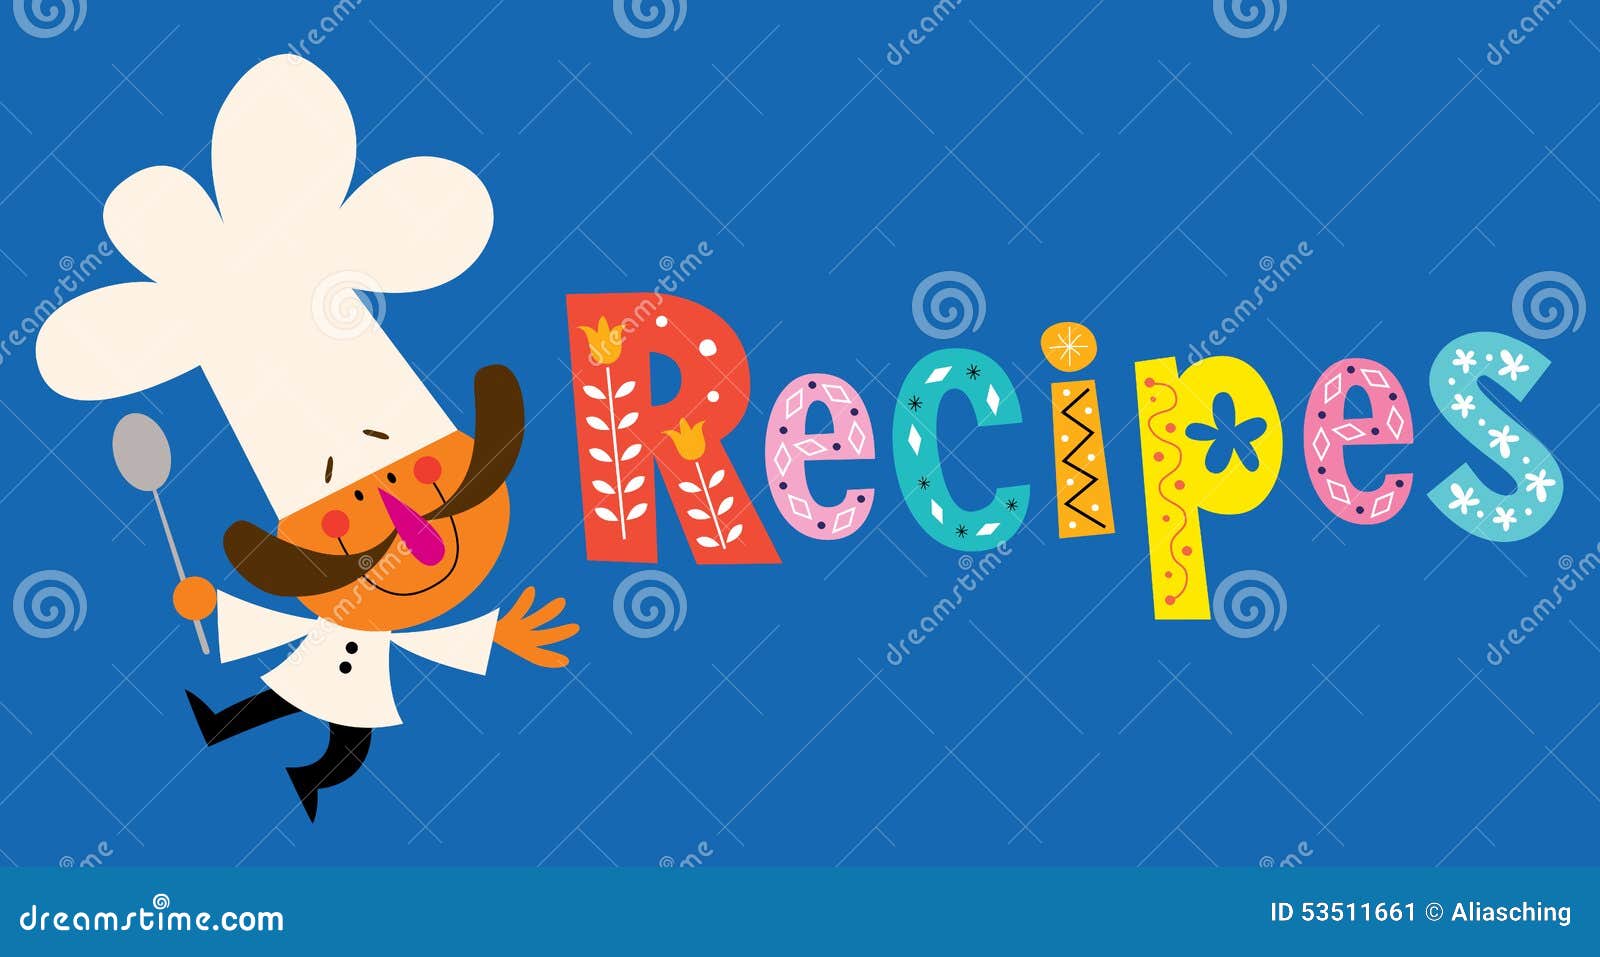 Recipes stock vector. Illustration of happy, cartoon - 53511661